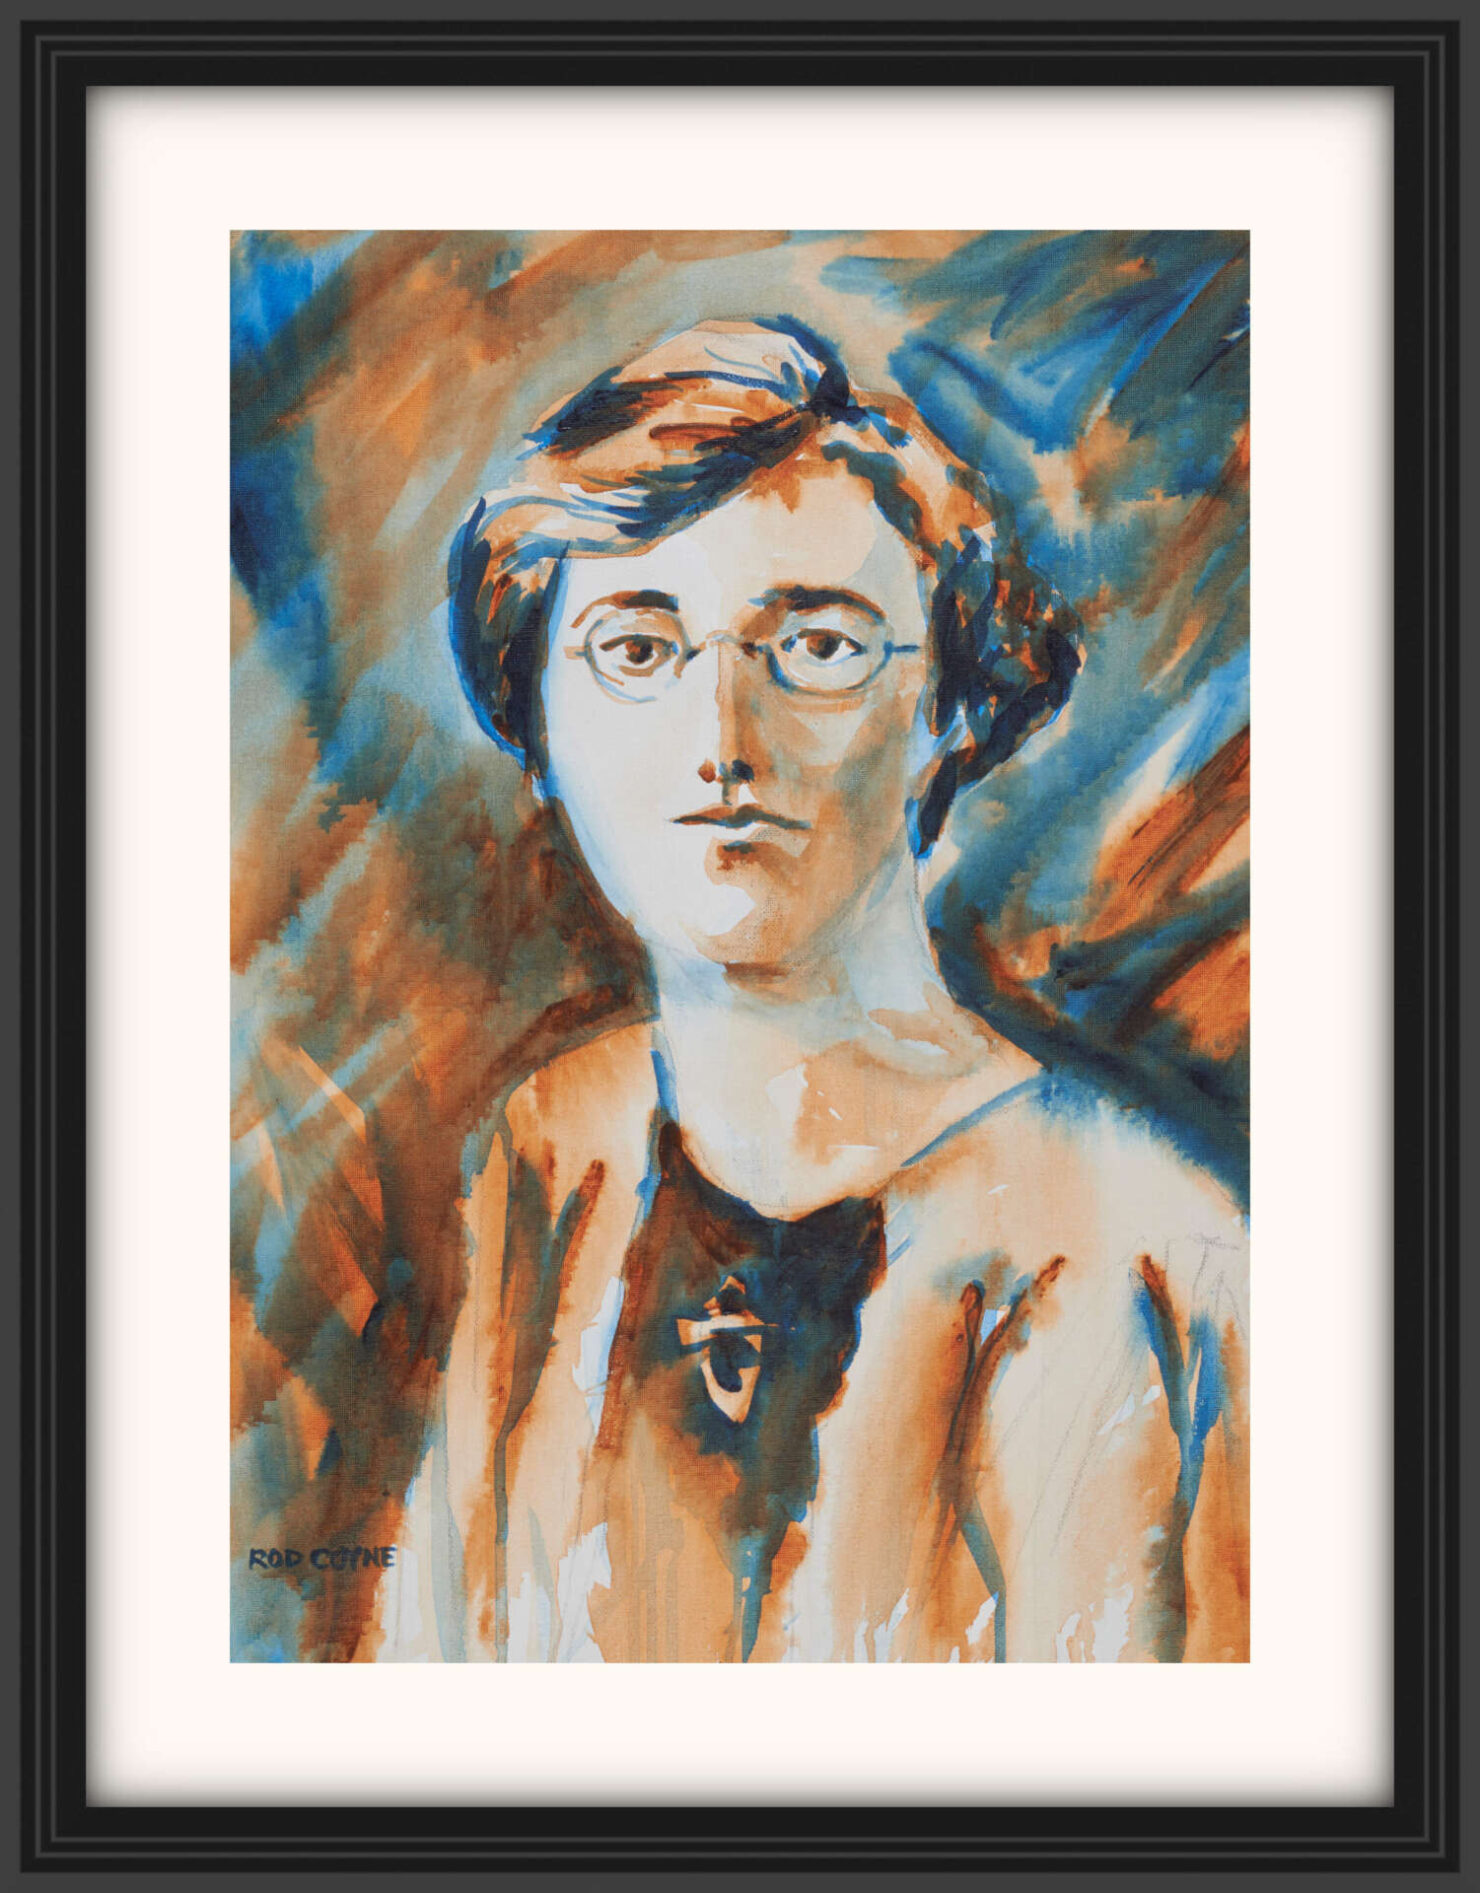 artist rod coyne's portrait "Kathleen Clarke 1916" is shown here, on a white mount in a black frame.